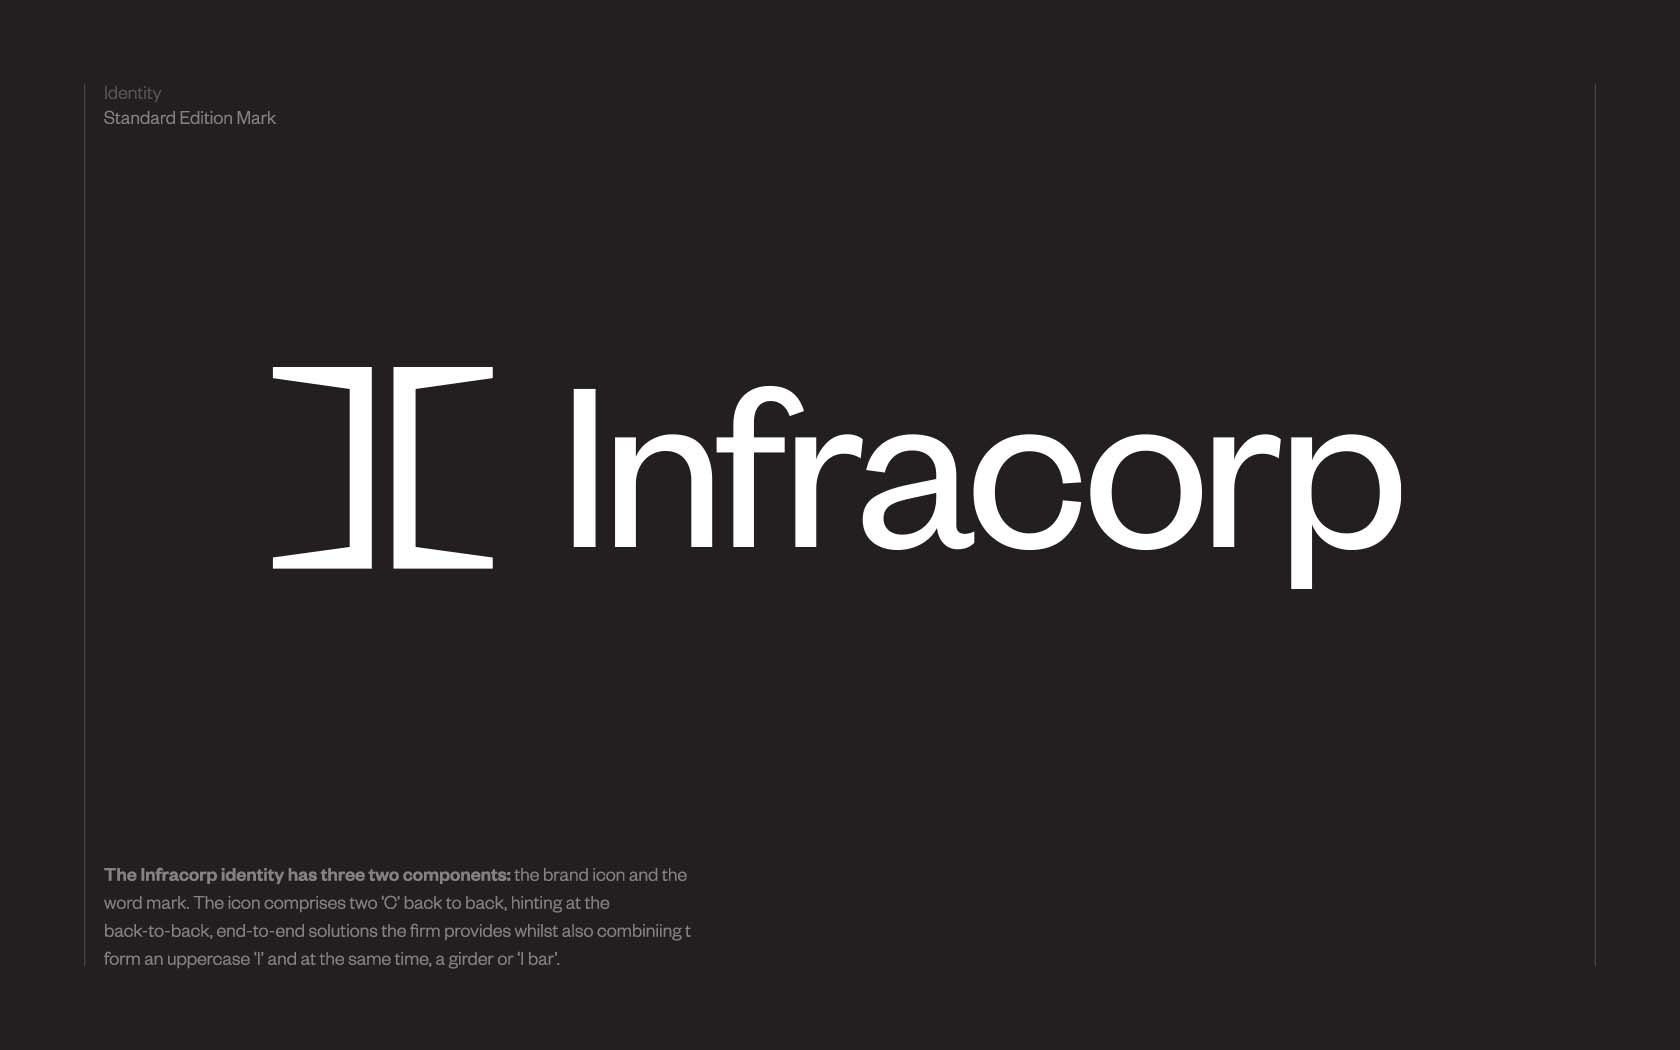 Infracorp brand mark in white